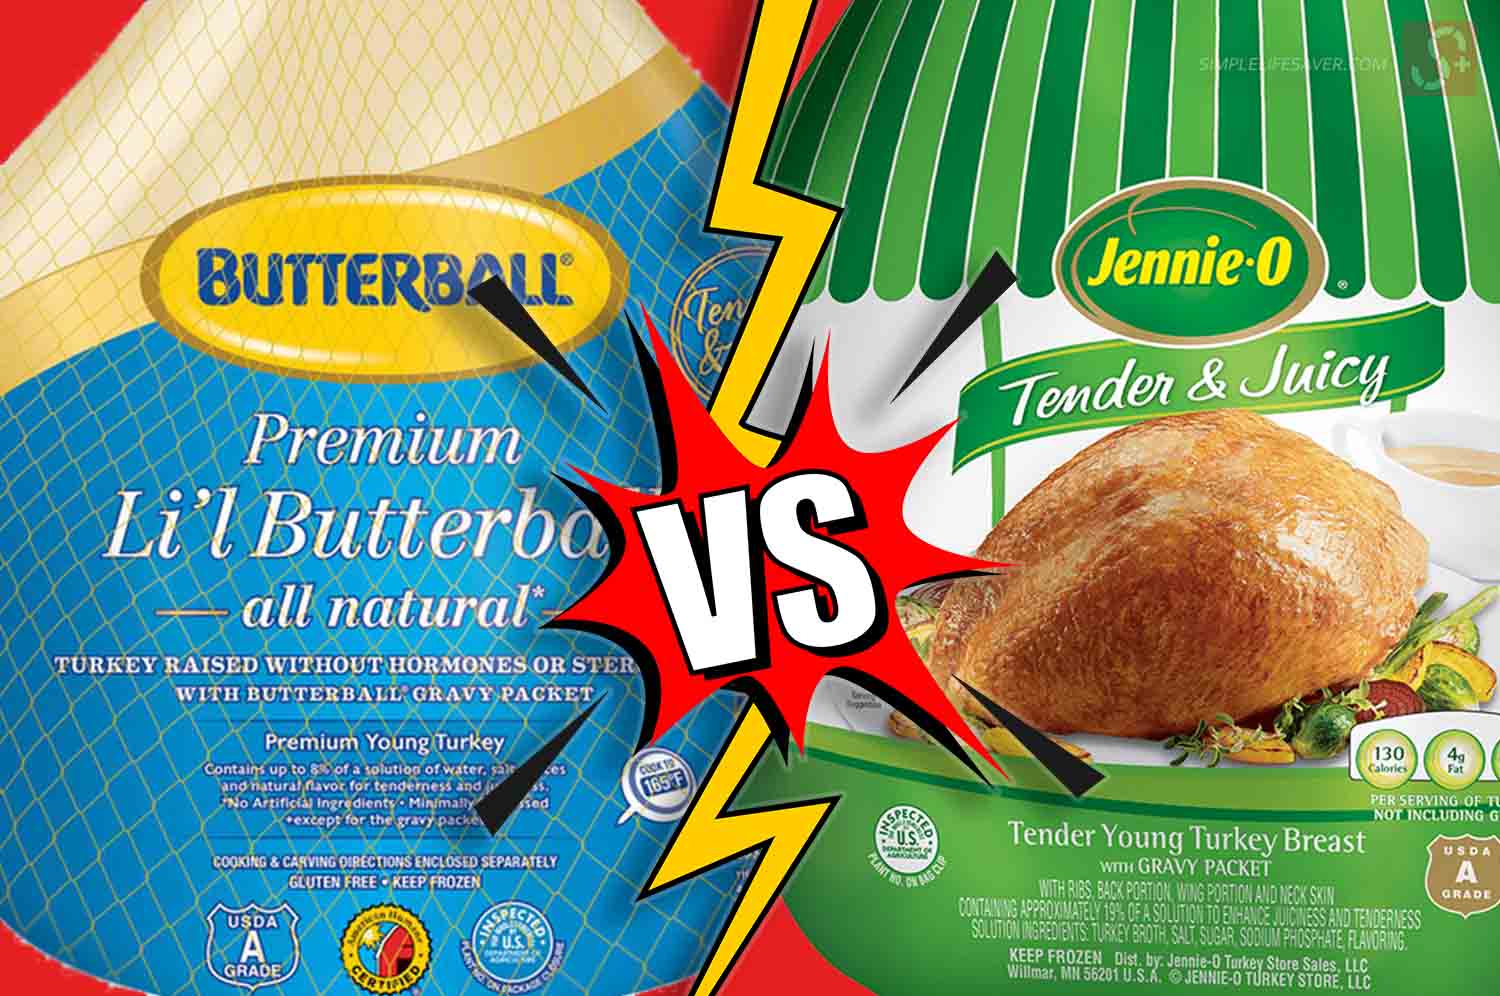 Butterball Comparison with Jennie-O